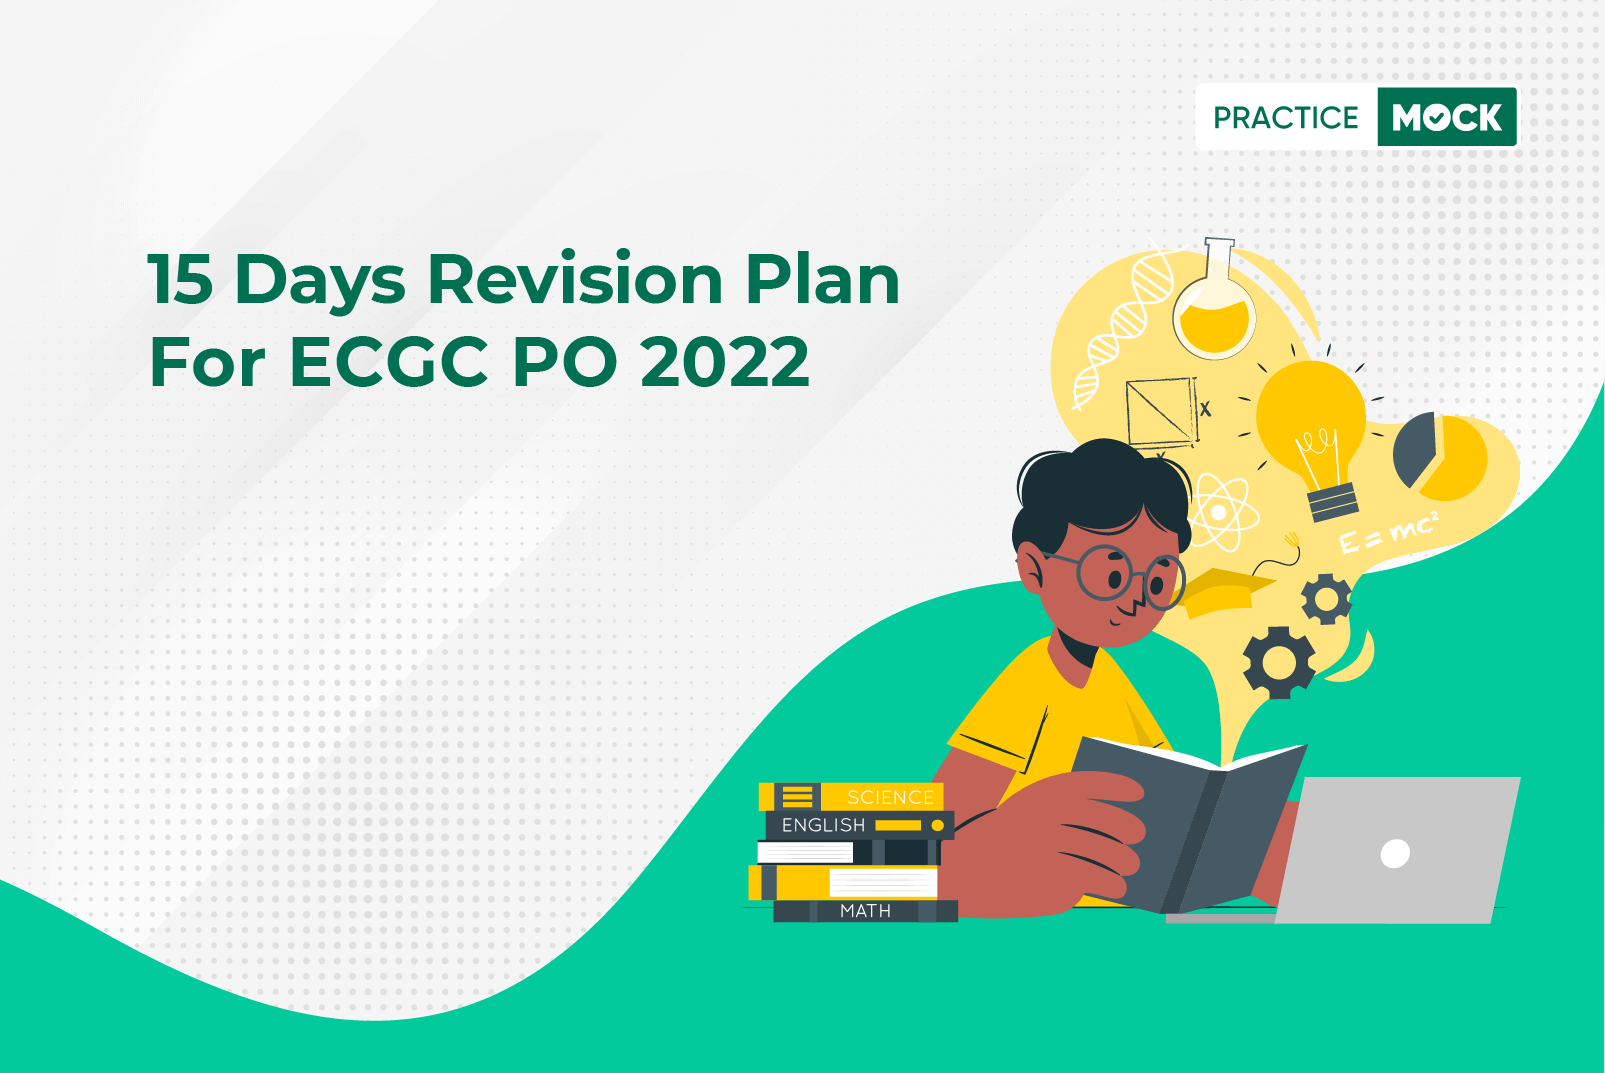 15 Days Revision Plan for ECGC PO 2022